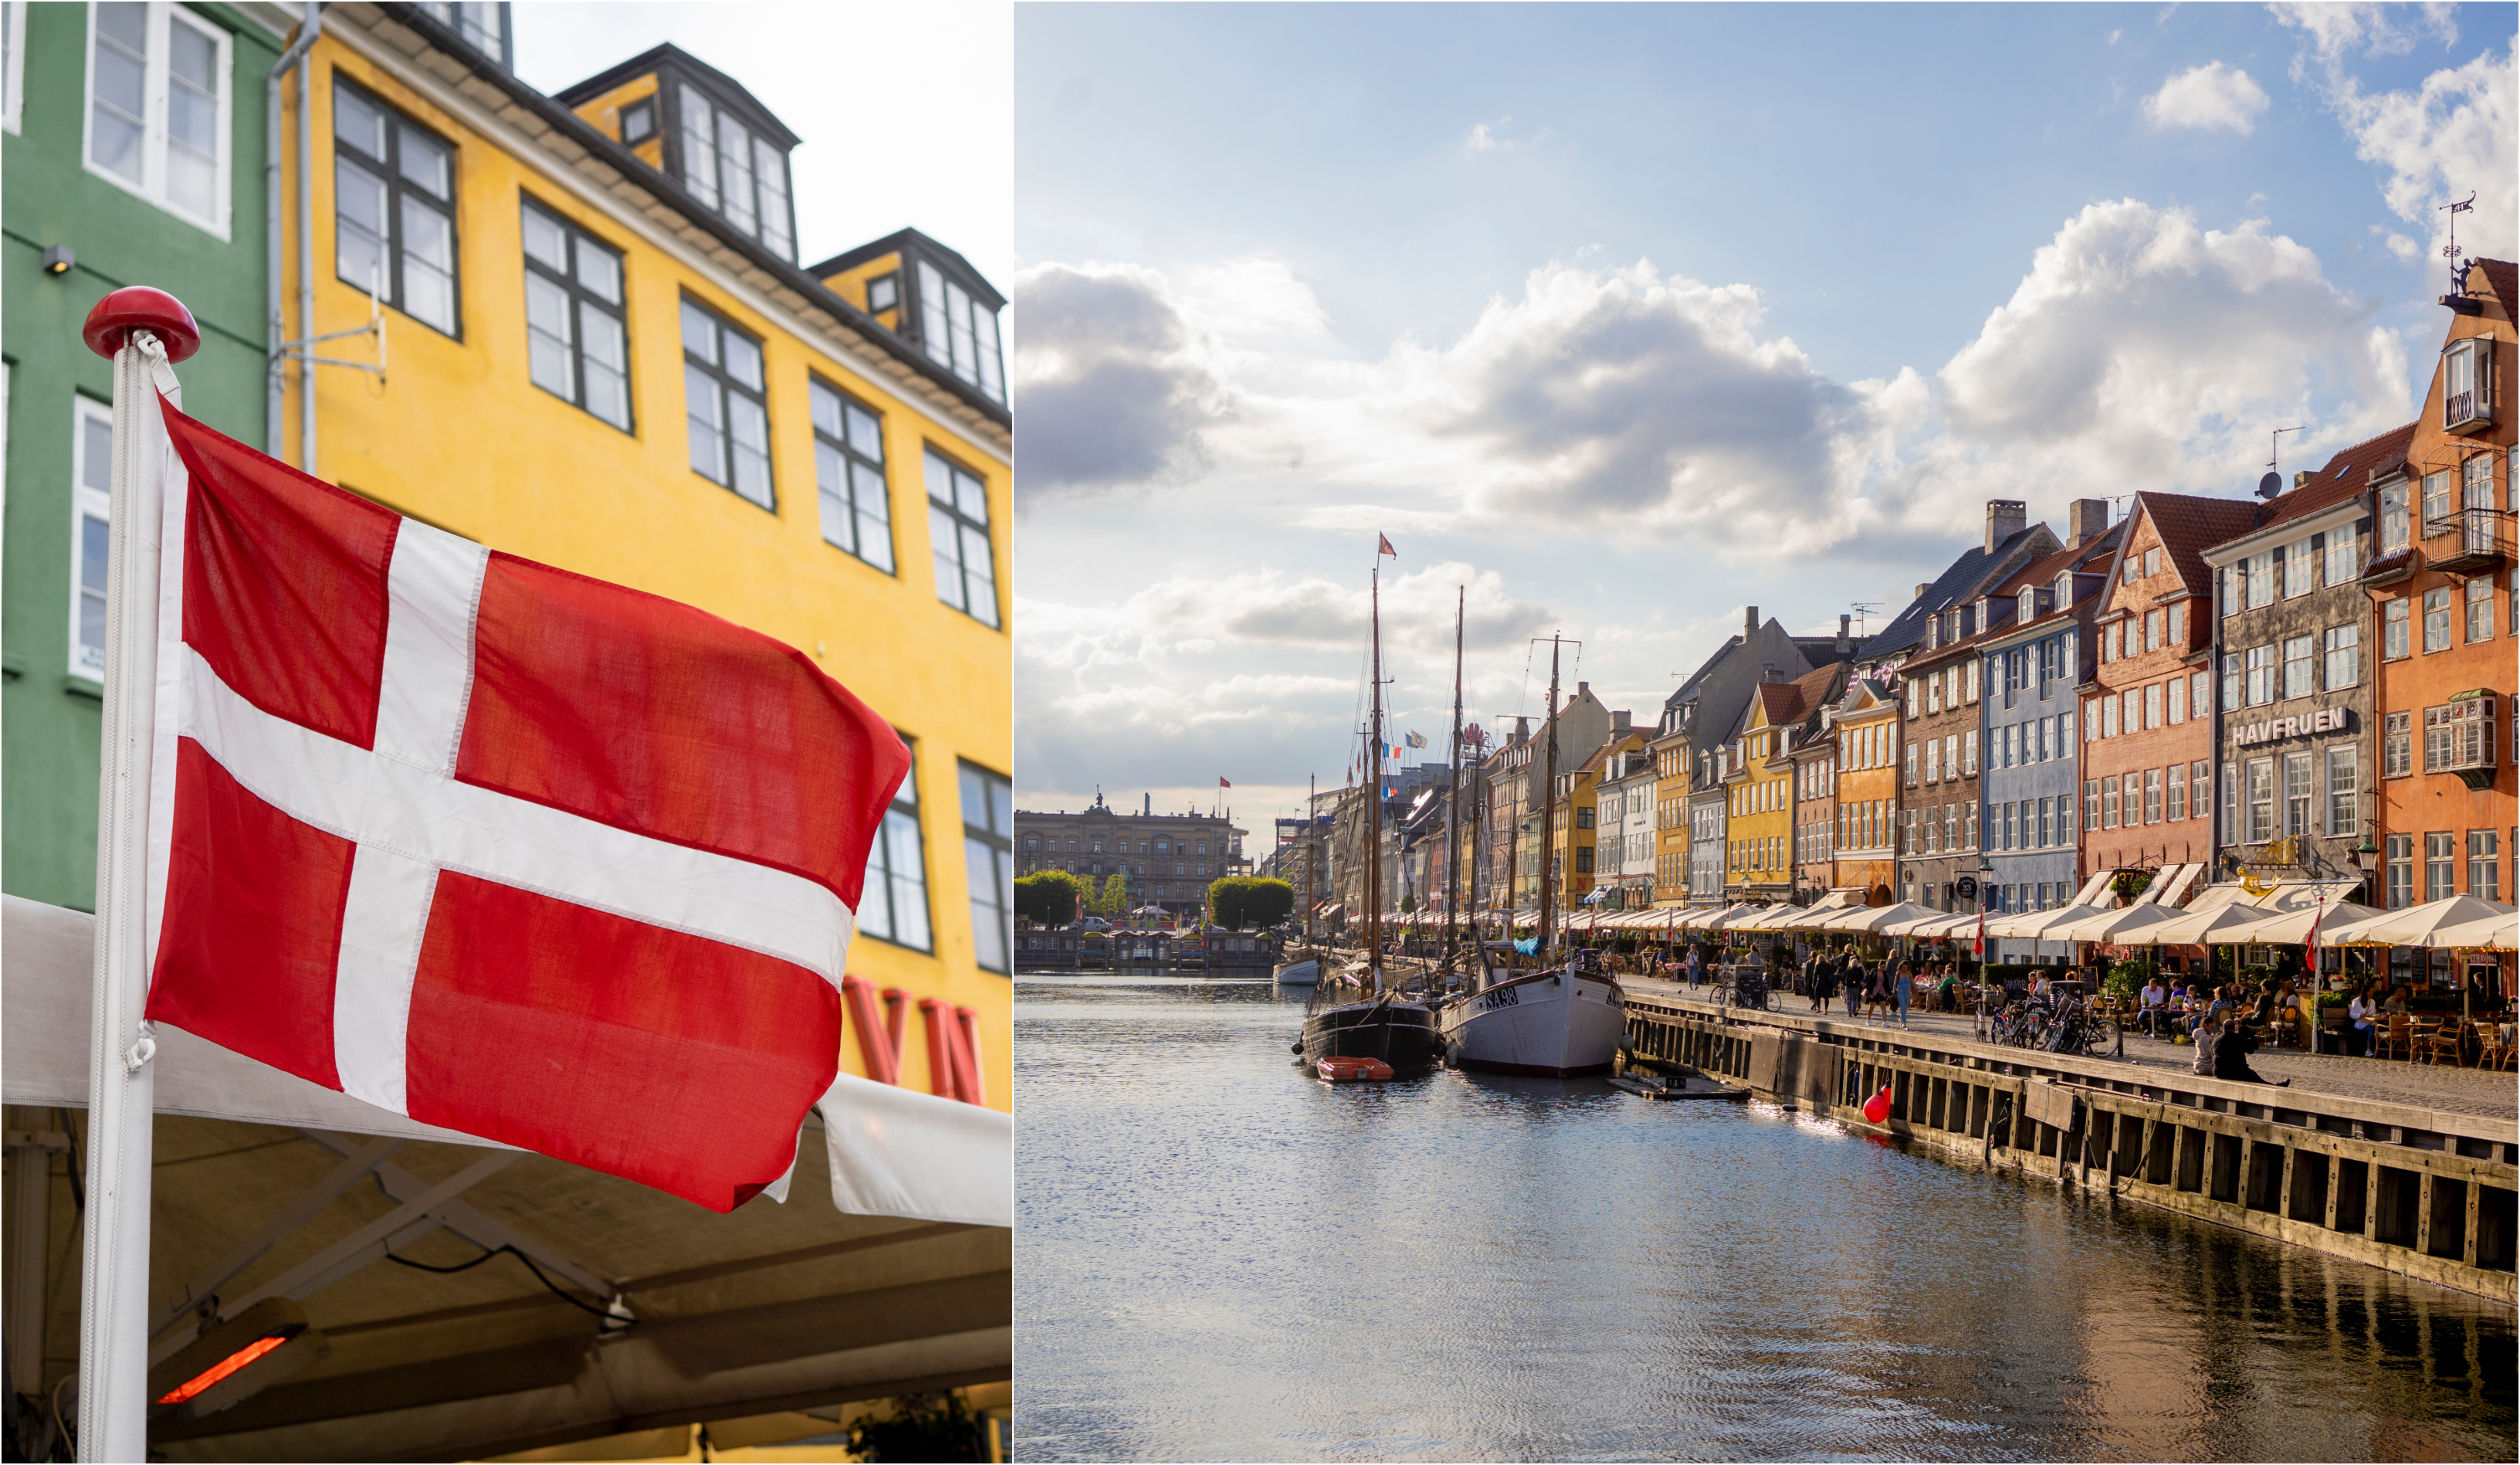 7 cose da non perdere assolutamente in una giornata di sole a Copenaghen